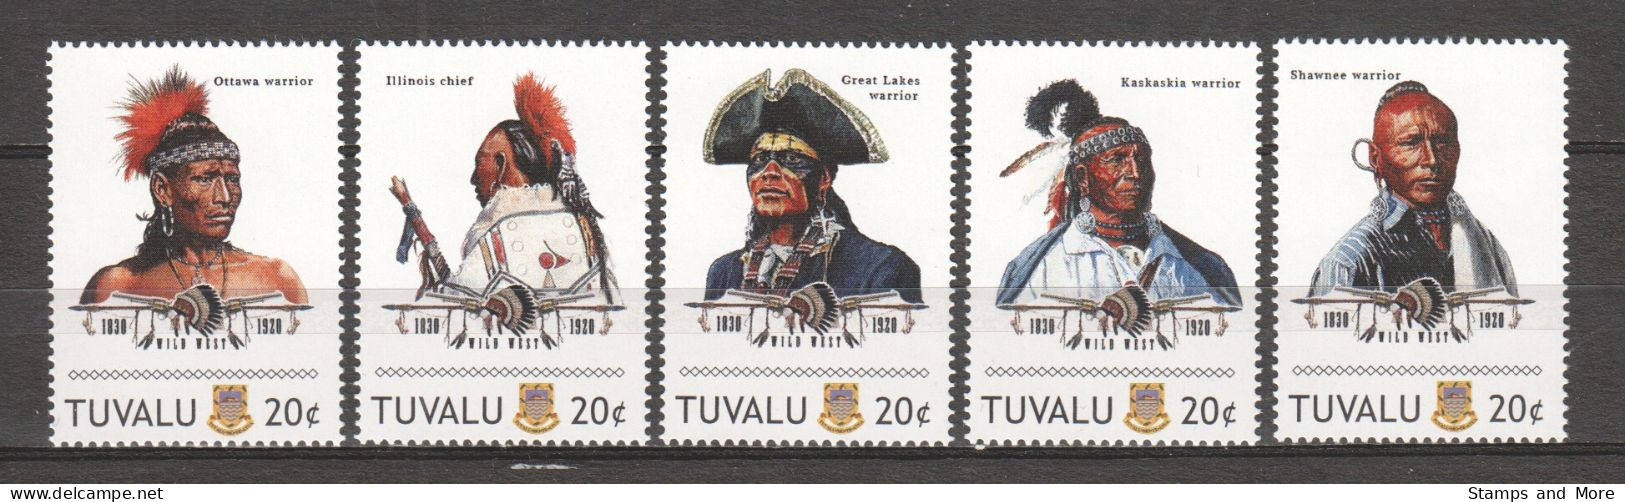 Tuvalu - MNH Set (1) NATIVE AMERICAN TRIBES - INDIANS - Indios Americanas